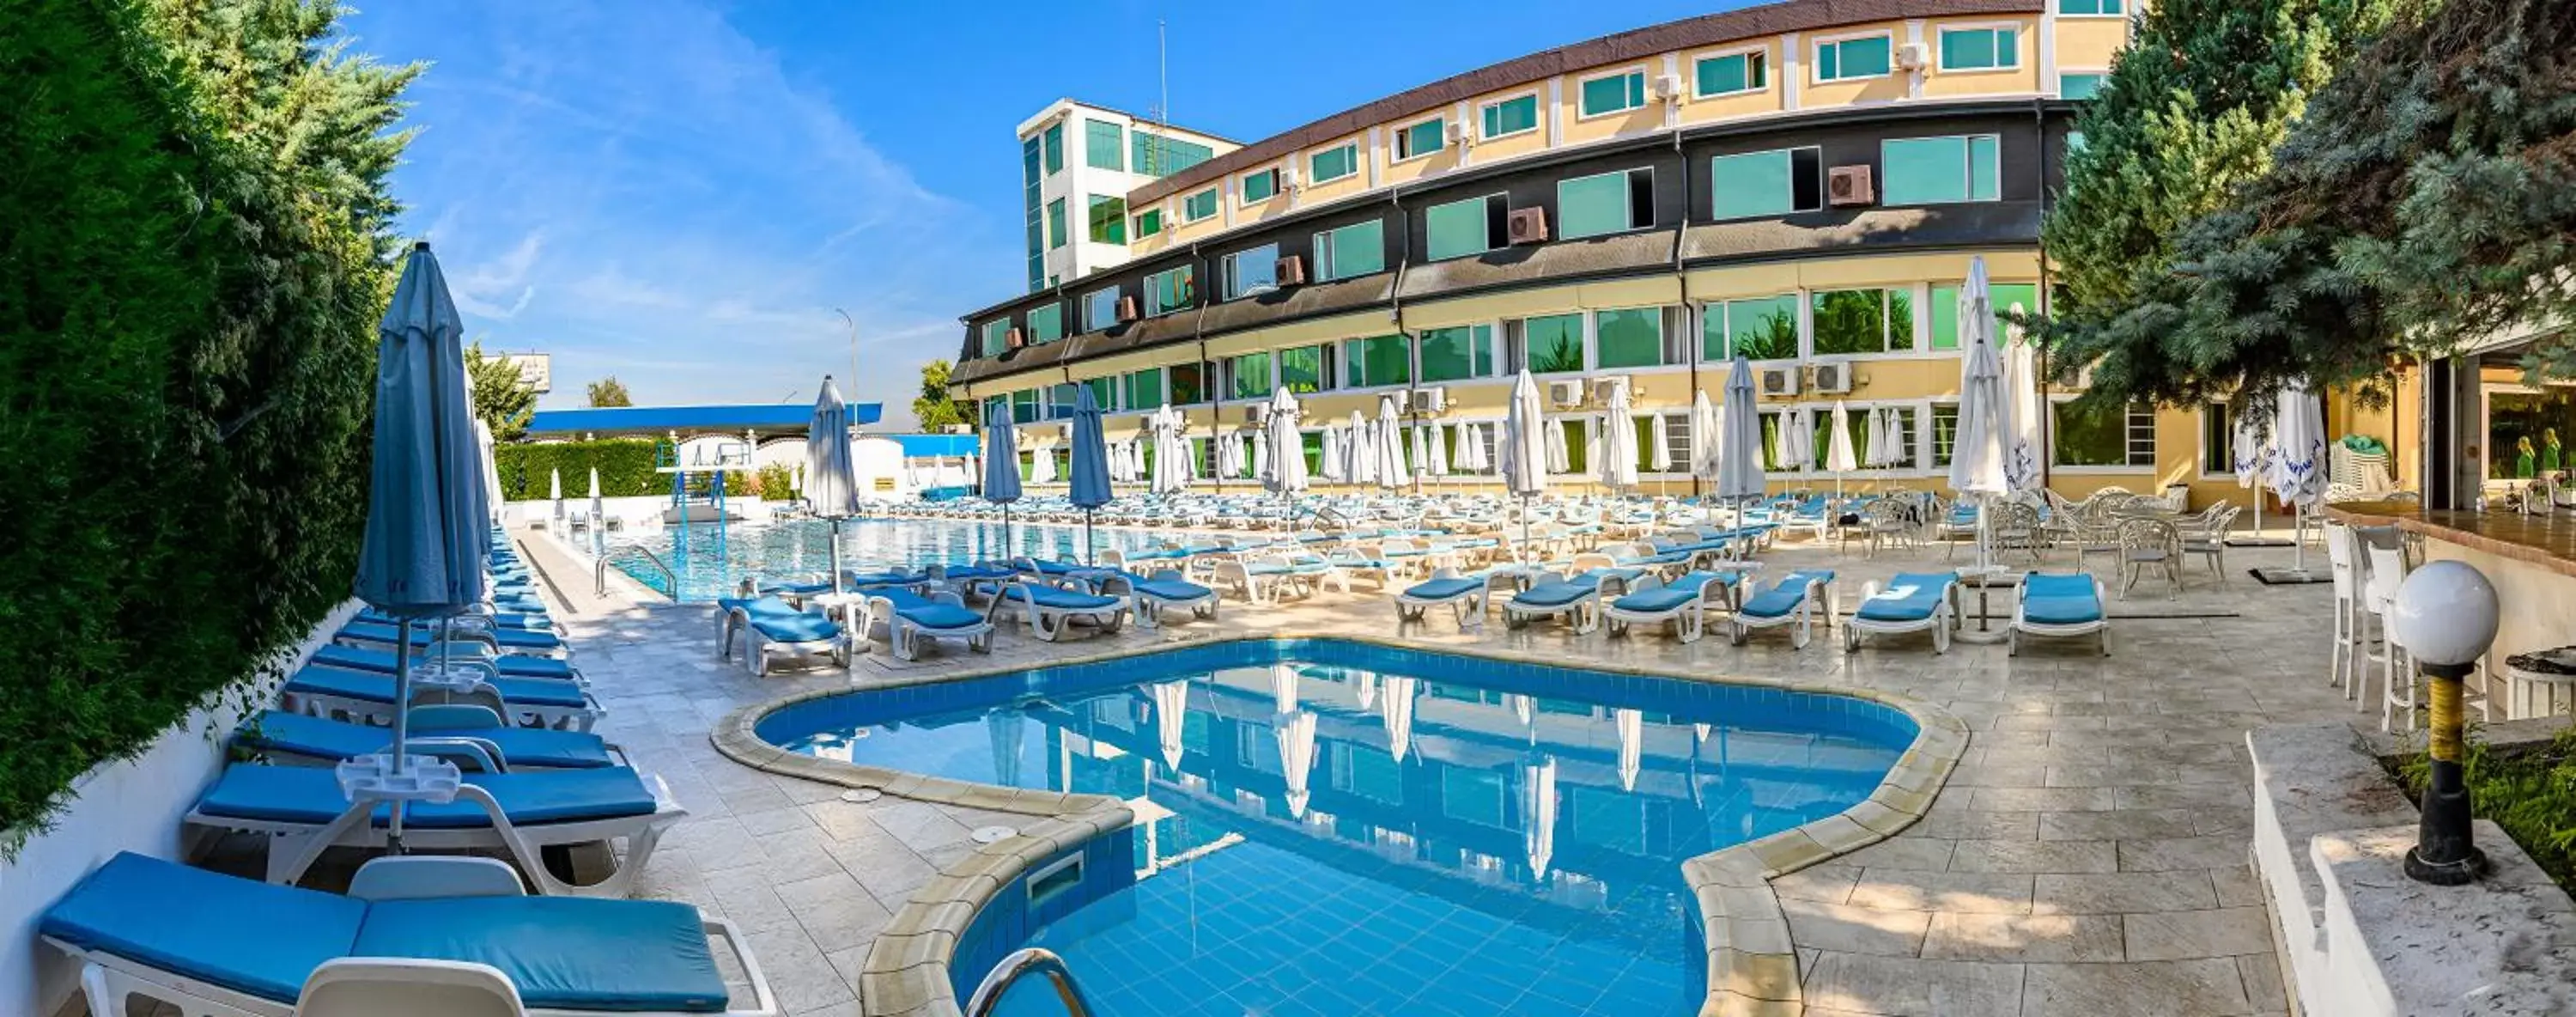 Swimming Pool in Hotel Montecito